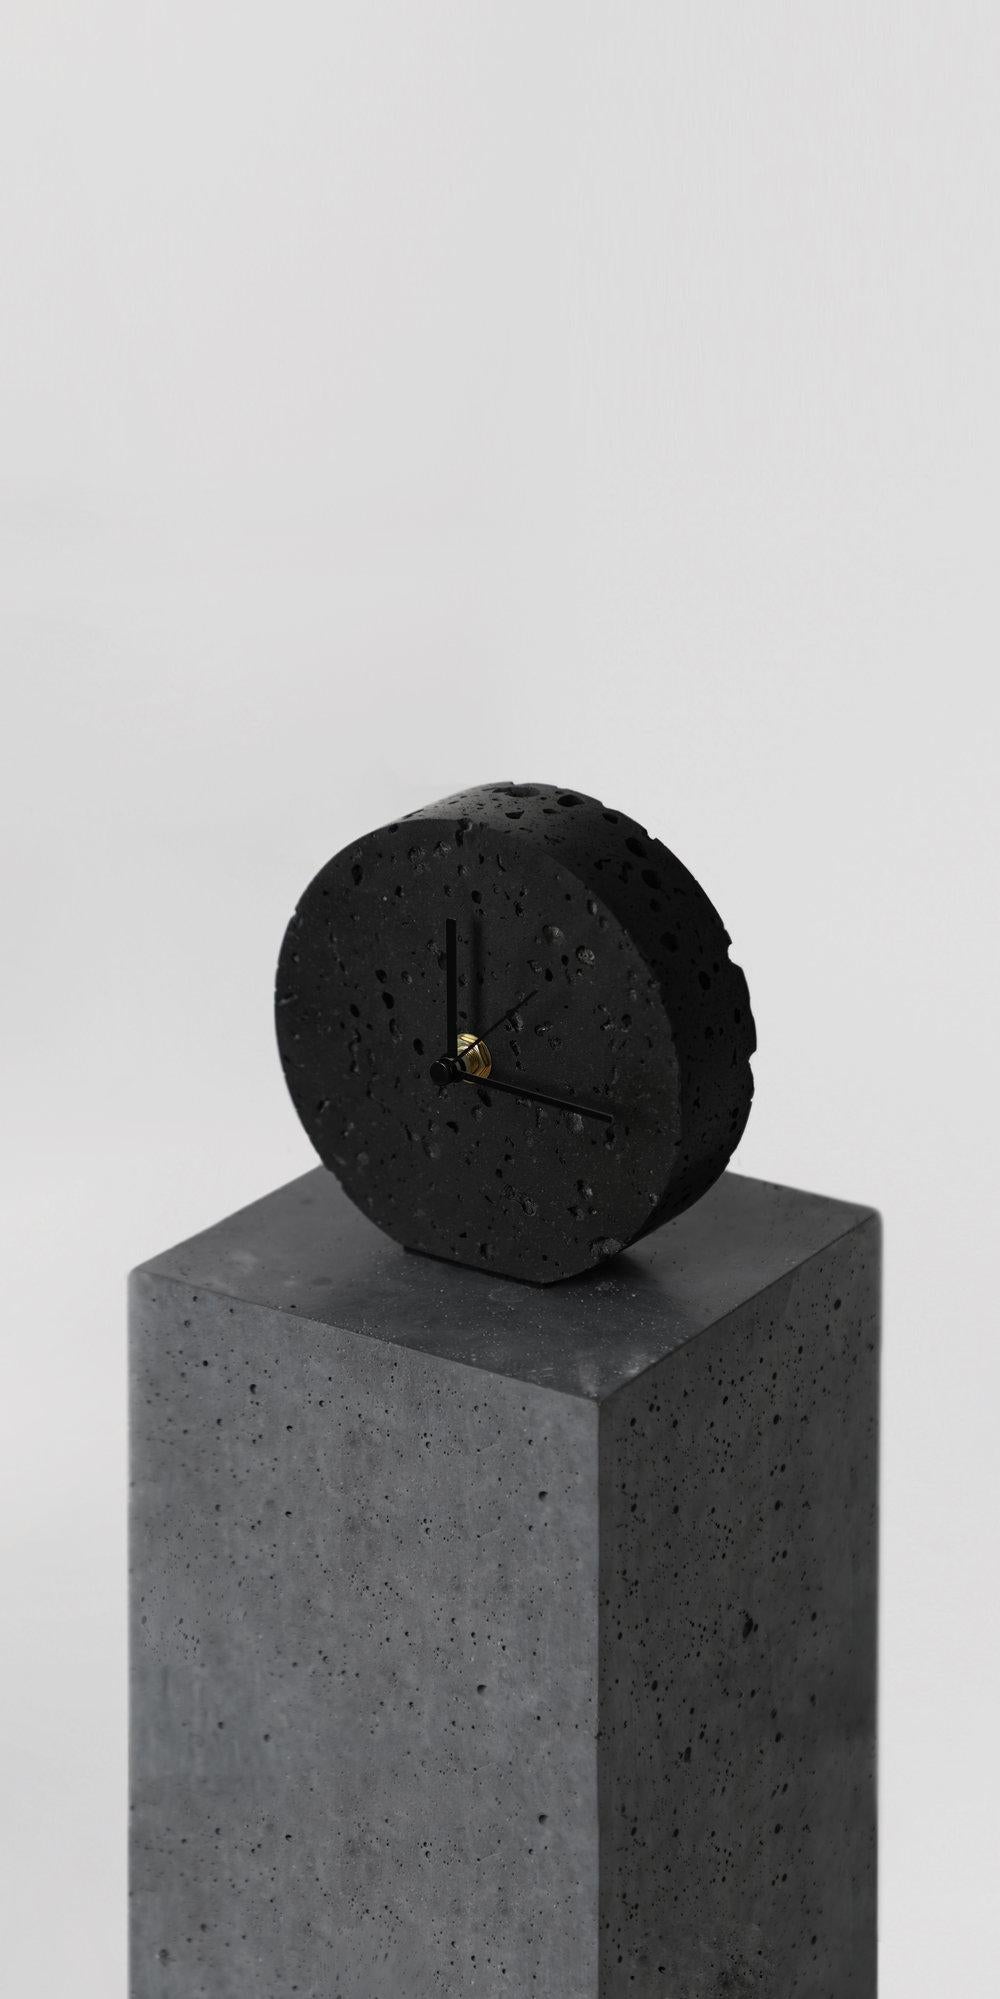 Table clock 'Moment' by Buzao x Bentu design.

Black lava stone

Measure: Diameter 14cm.